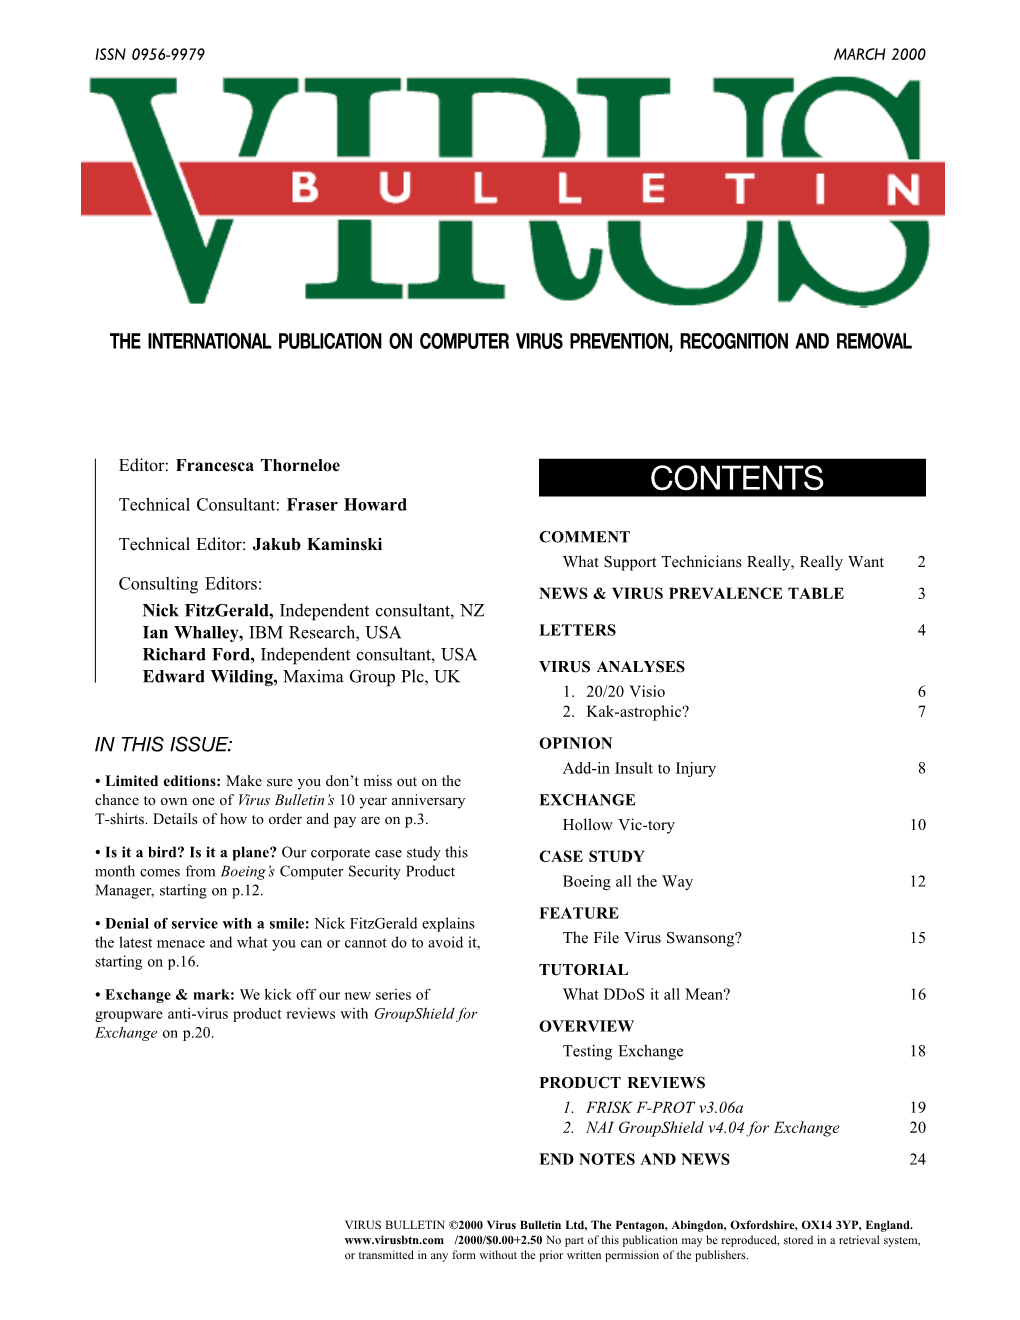 Virus Bulletin, March 2000